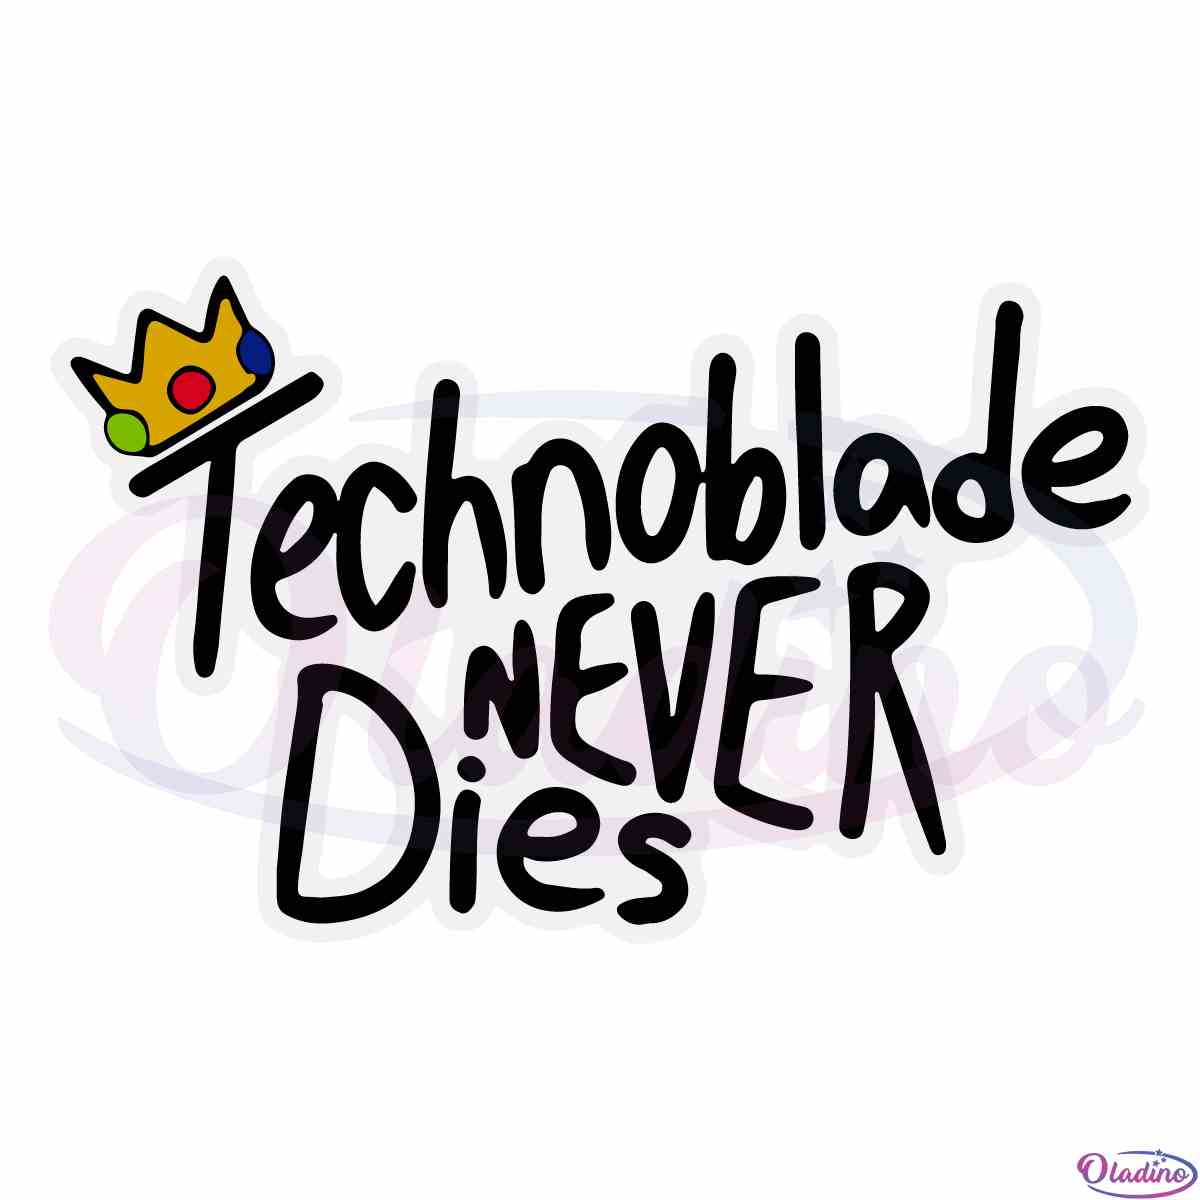 Technoblade never dies.